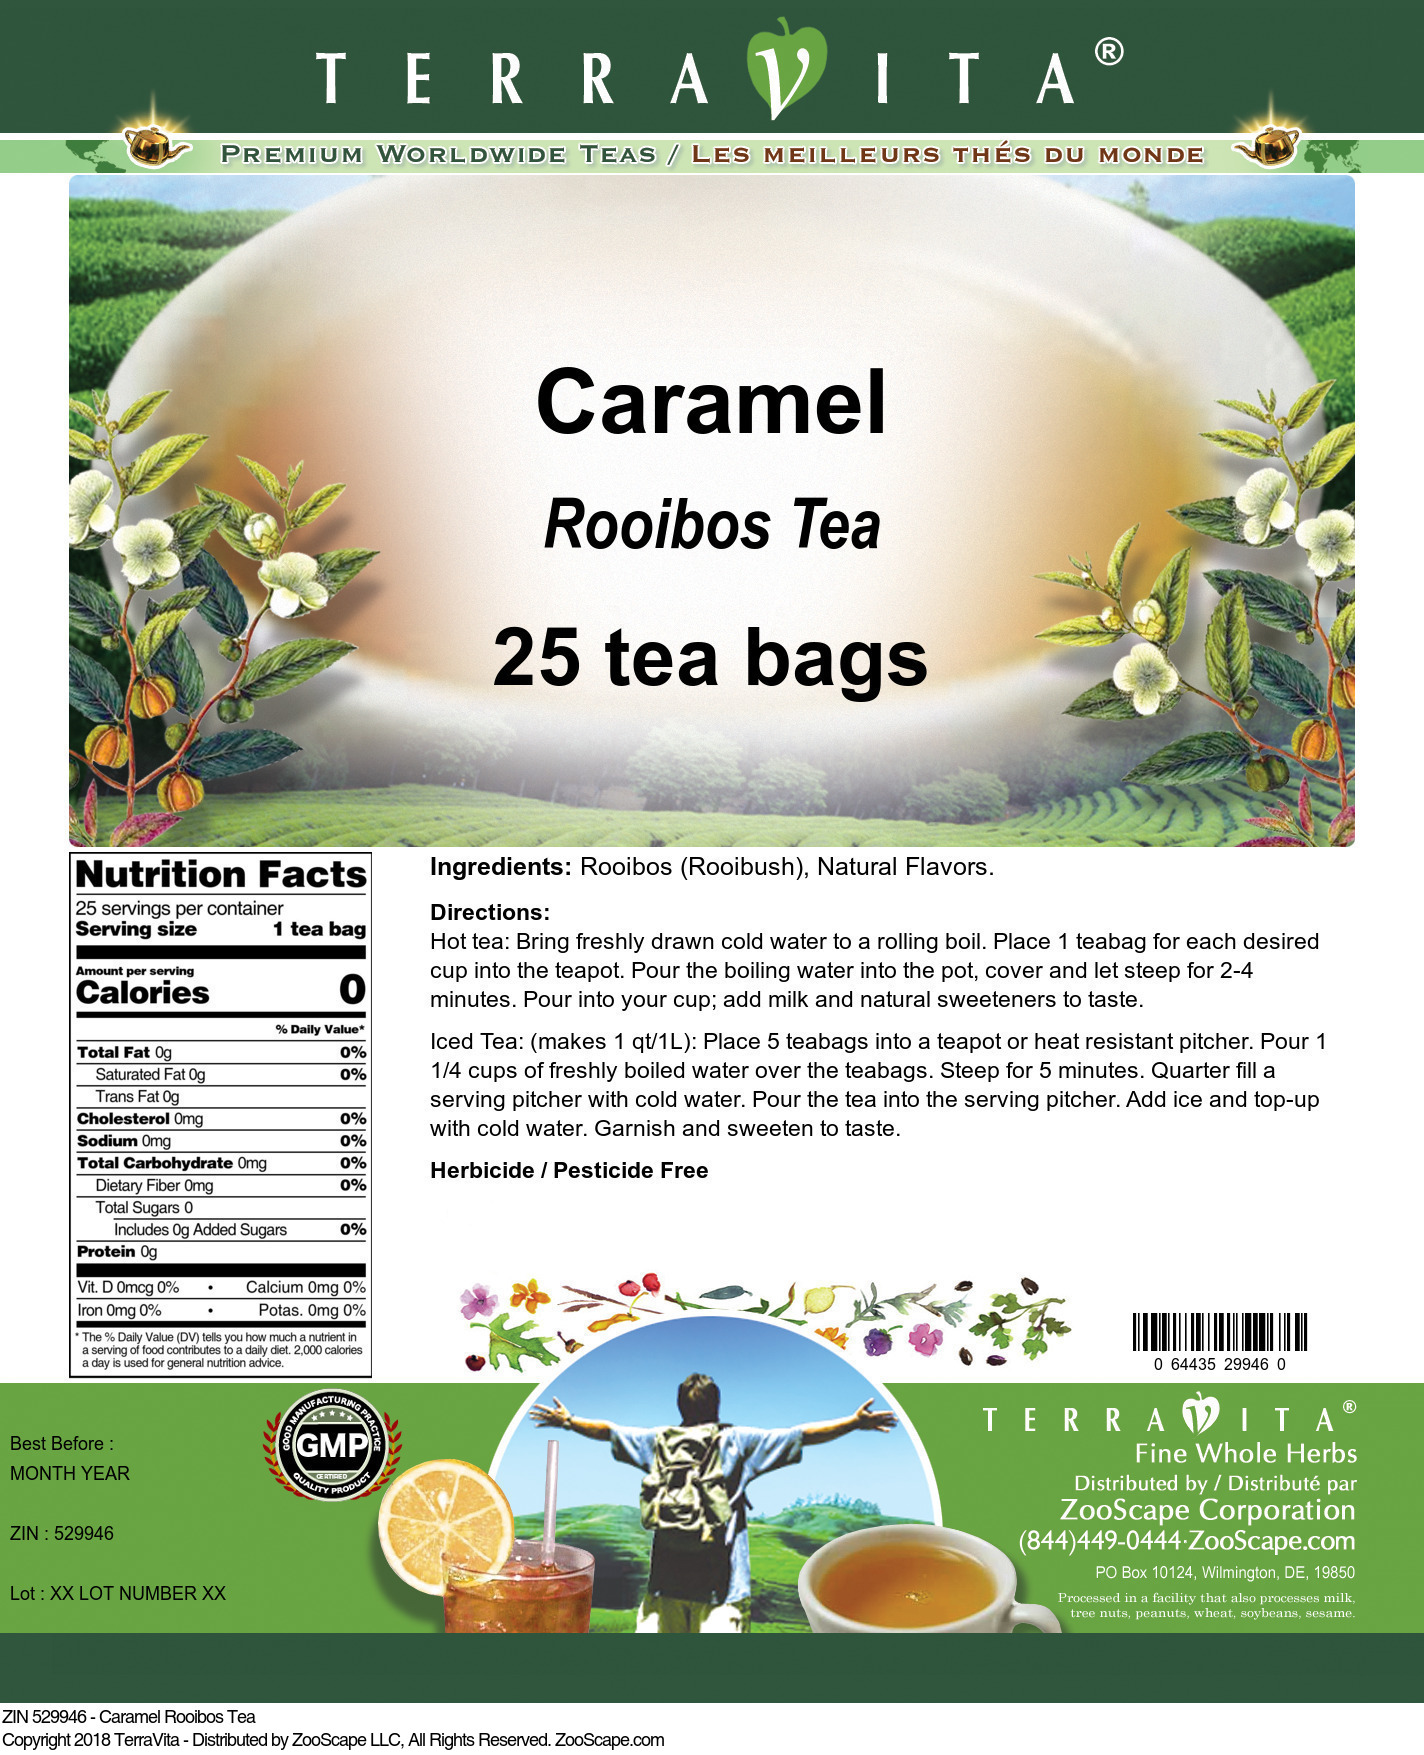 Caramel Rooibos Tea - Label